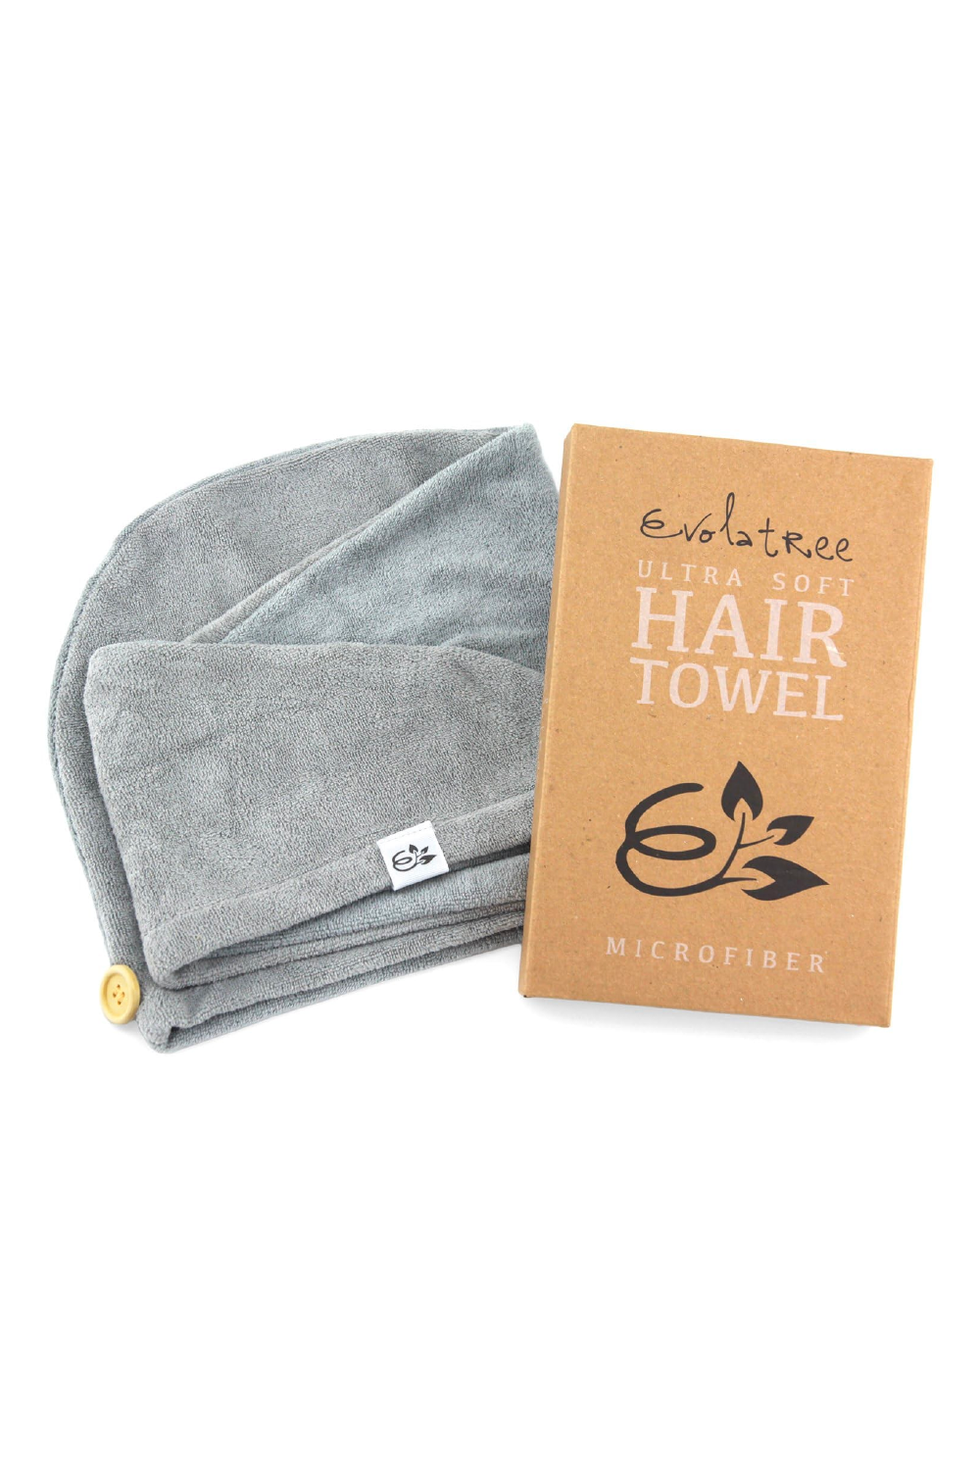 Evolatree Microfiber Hair Towel 